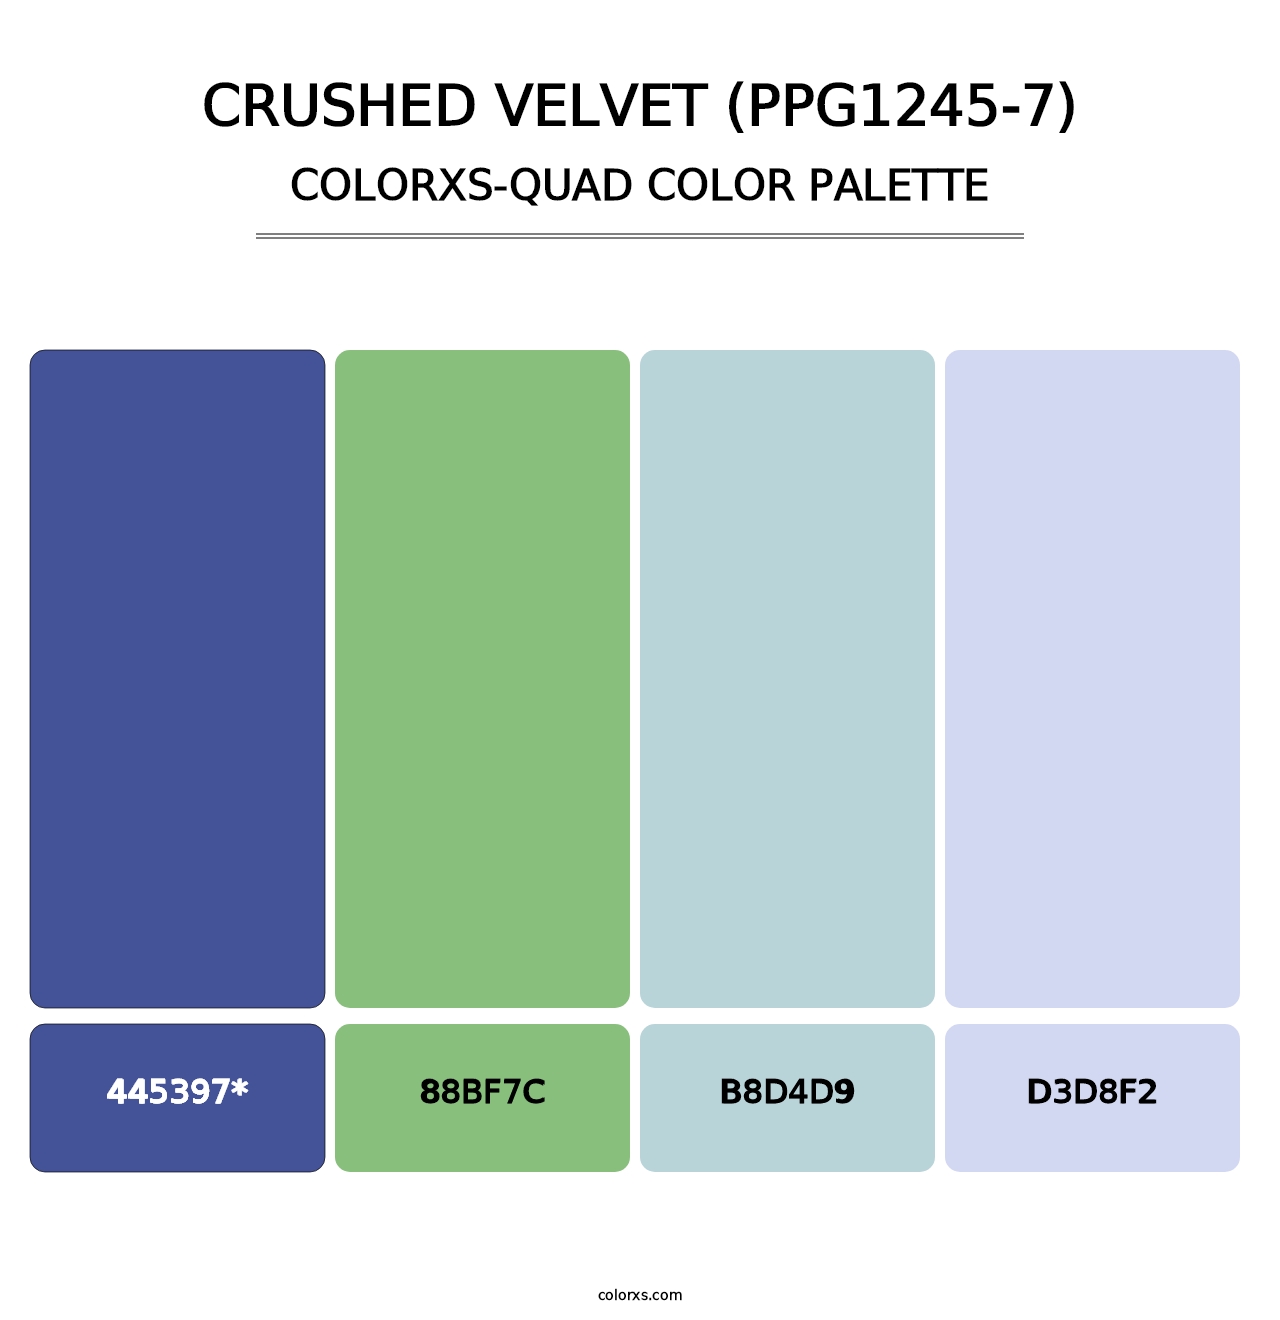 Crushed Velvet (PPG1245-7) - Colorxs Quad Palette